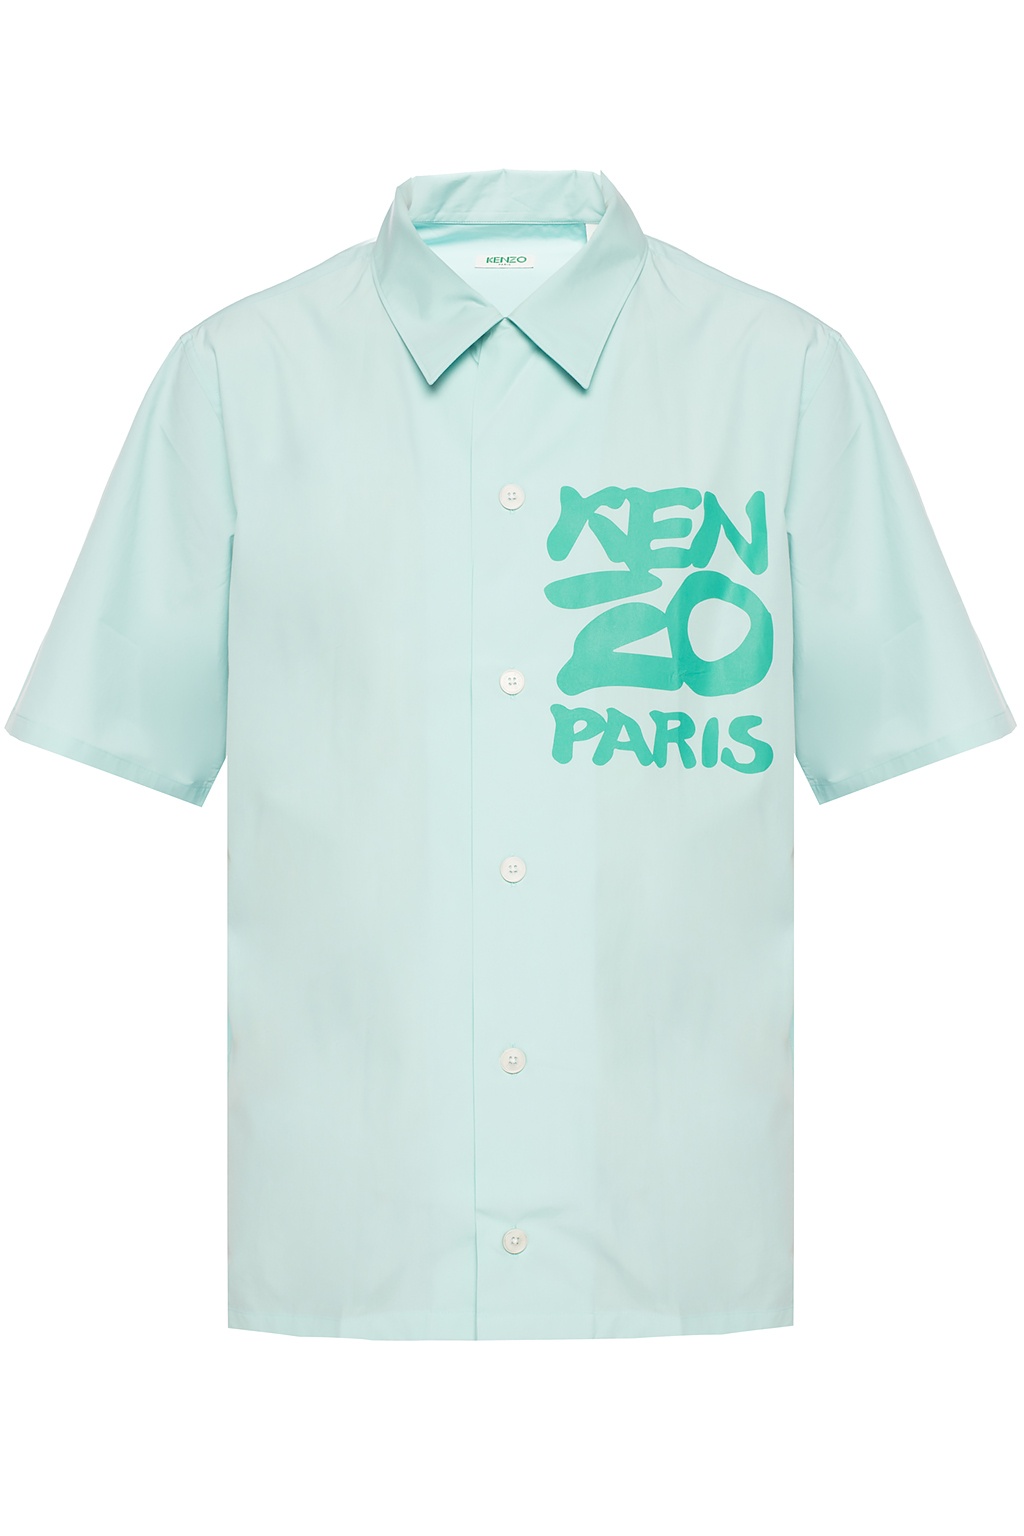 kenzo short sleeve shirt